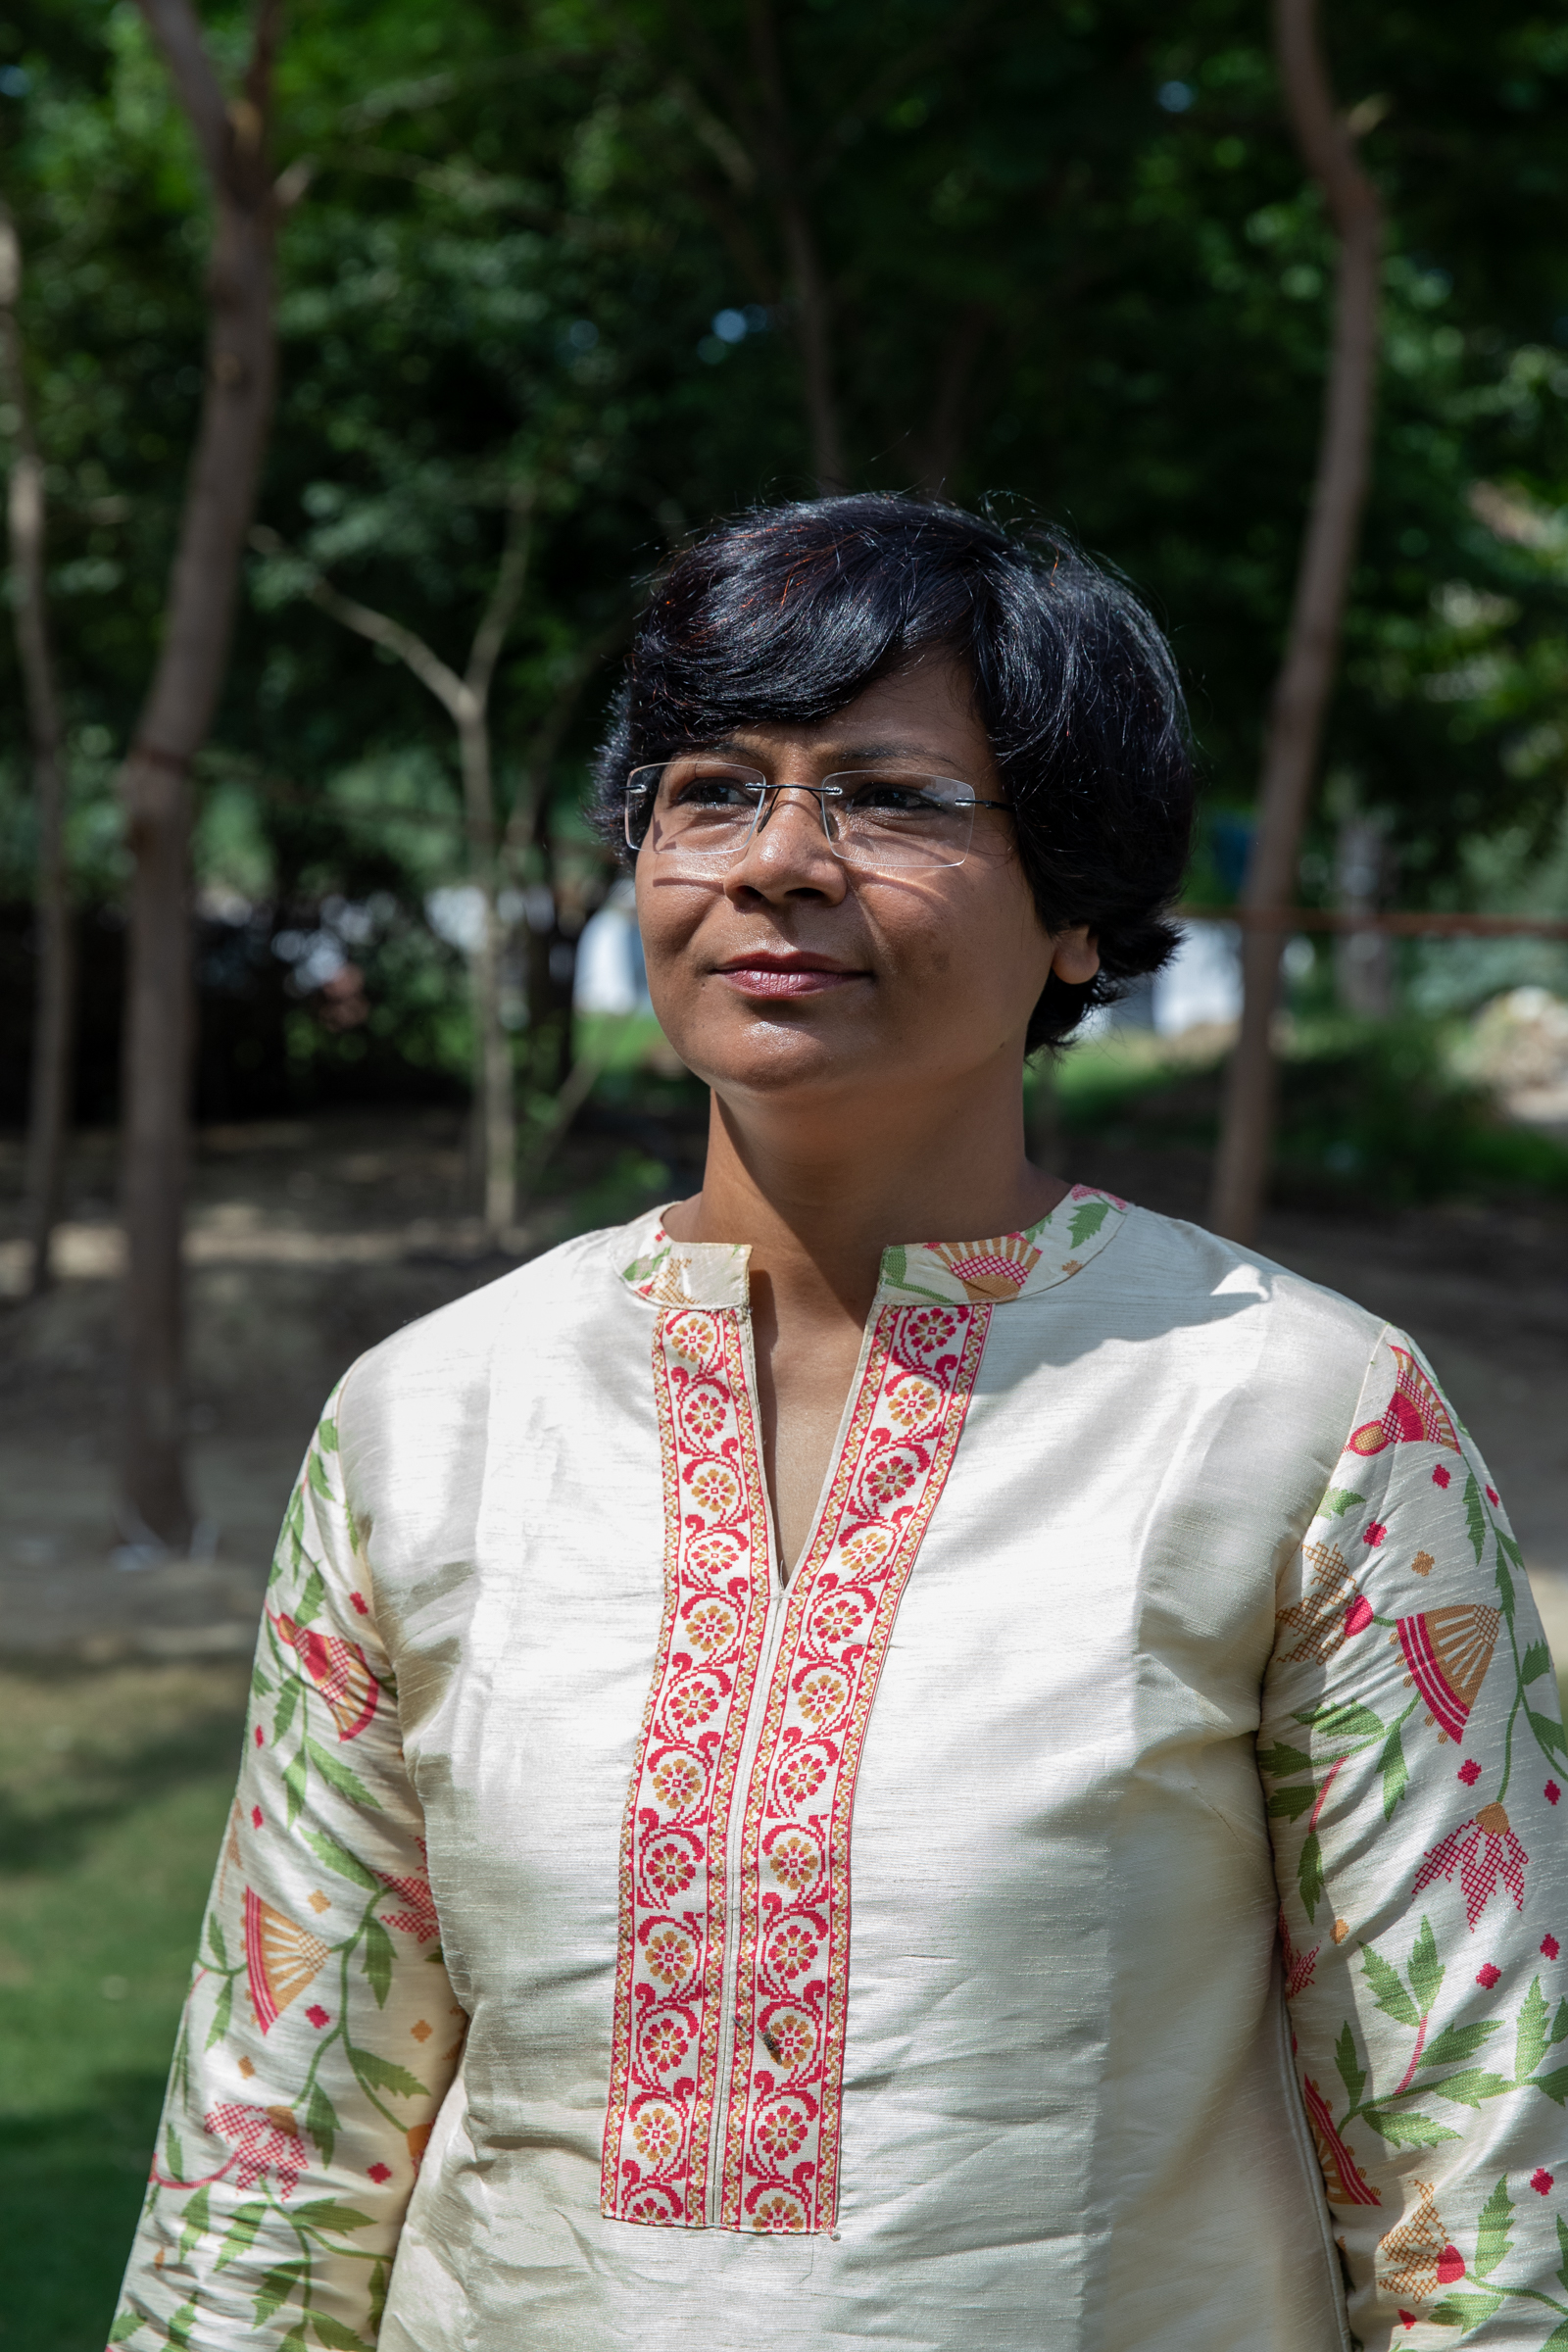 Organising is the biggest challenge for the Bahujan movement: BHU professor Indu Choudhary